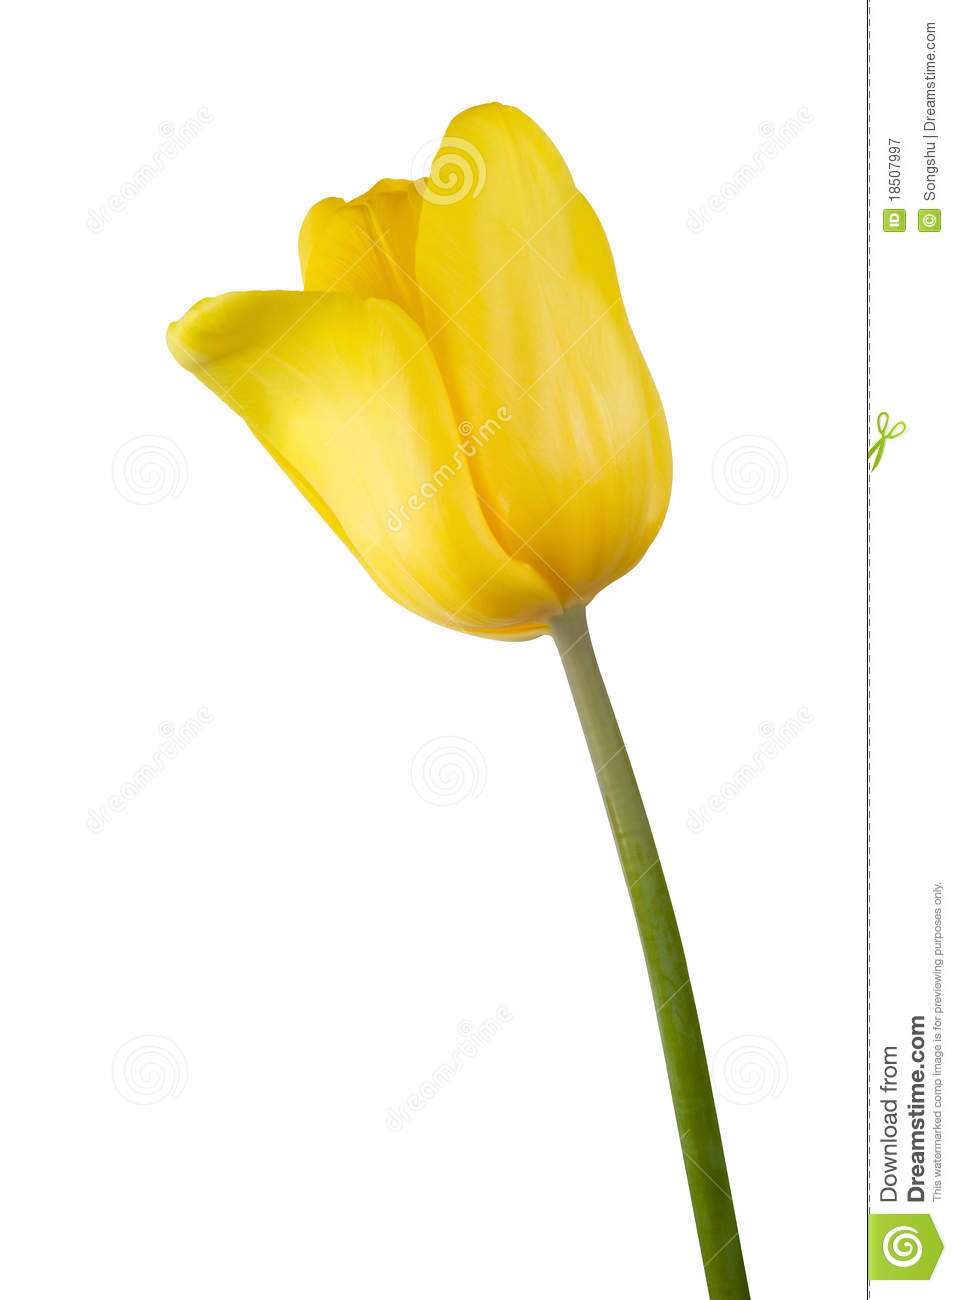 Yellow Tulip Royalty Free Stock Photography   Image  18507997